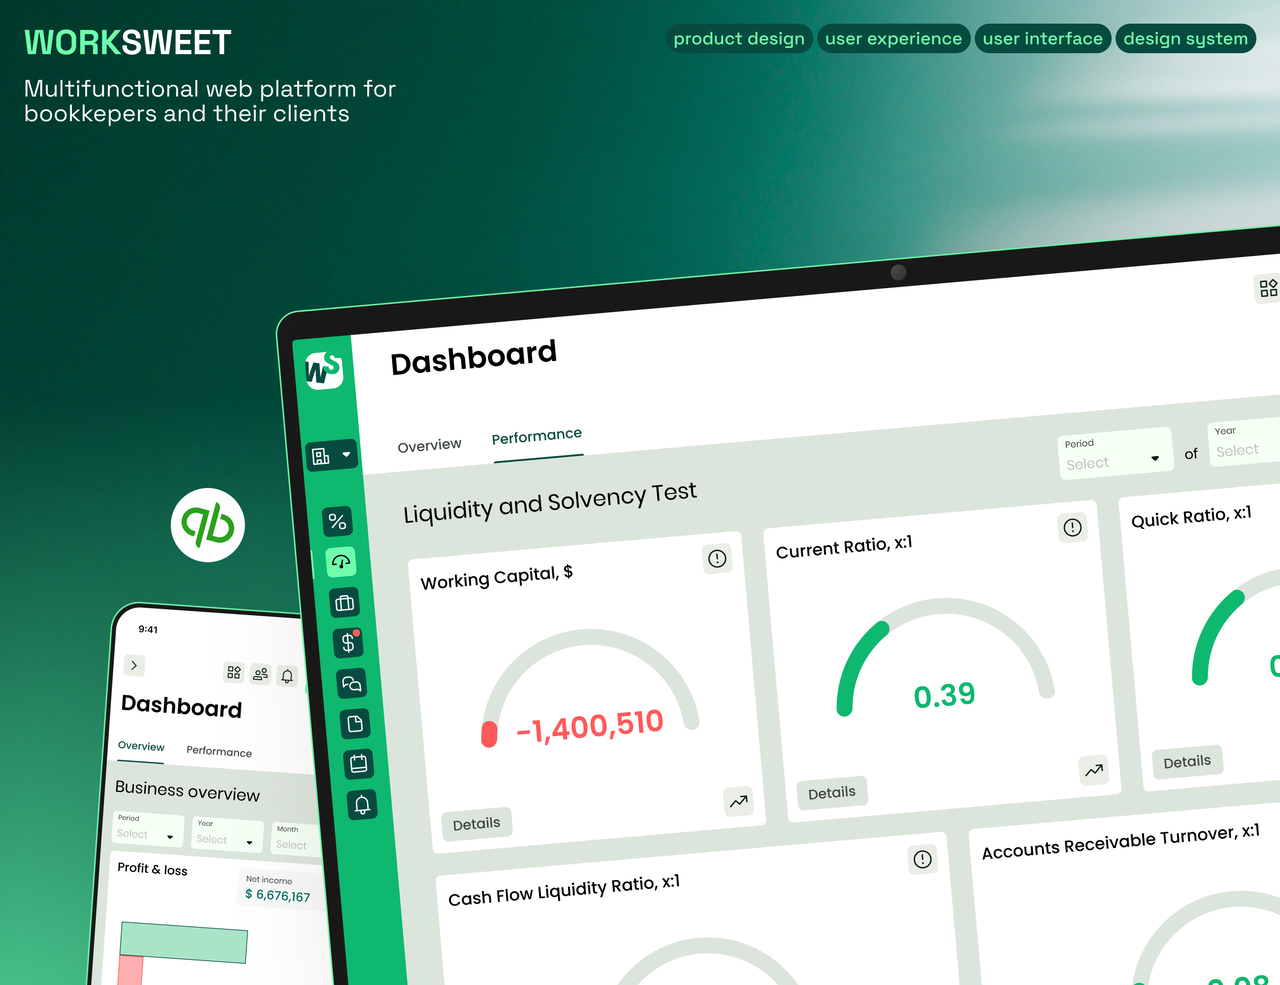 WorkSweet – multifunctional platform for bookkeepers